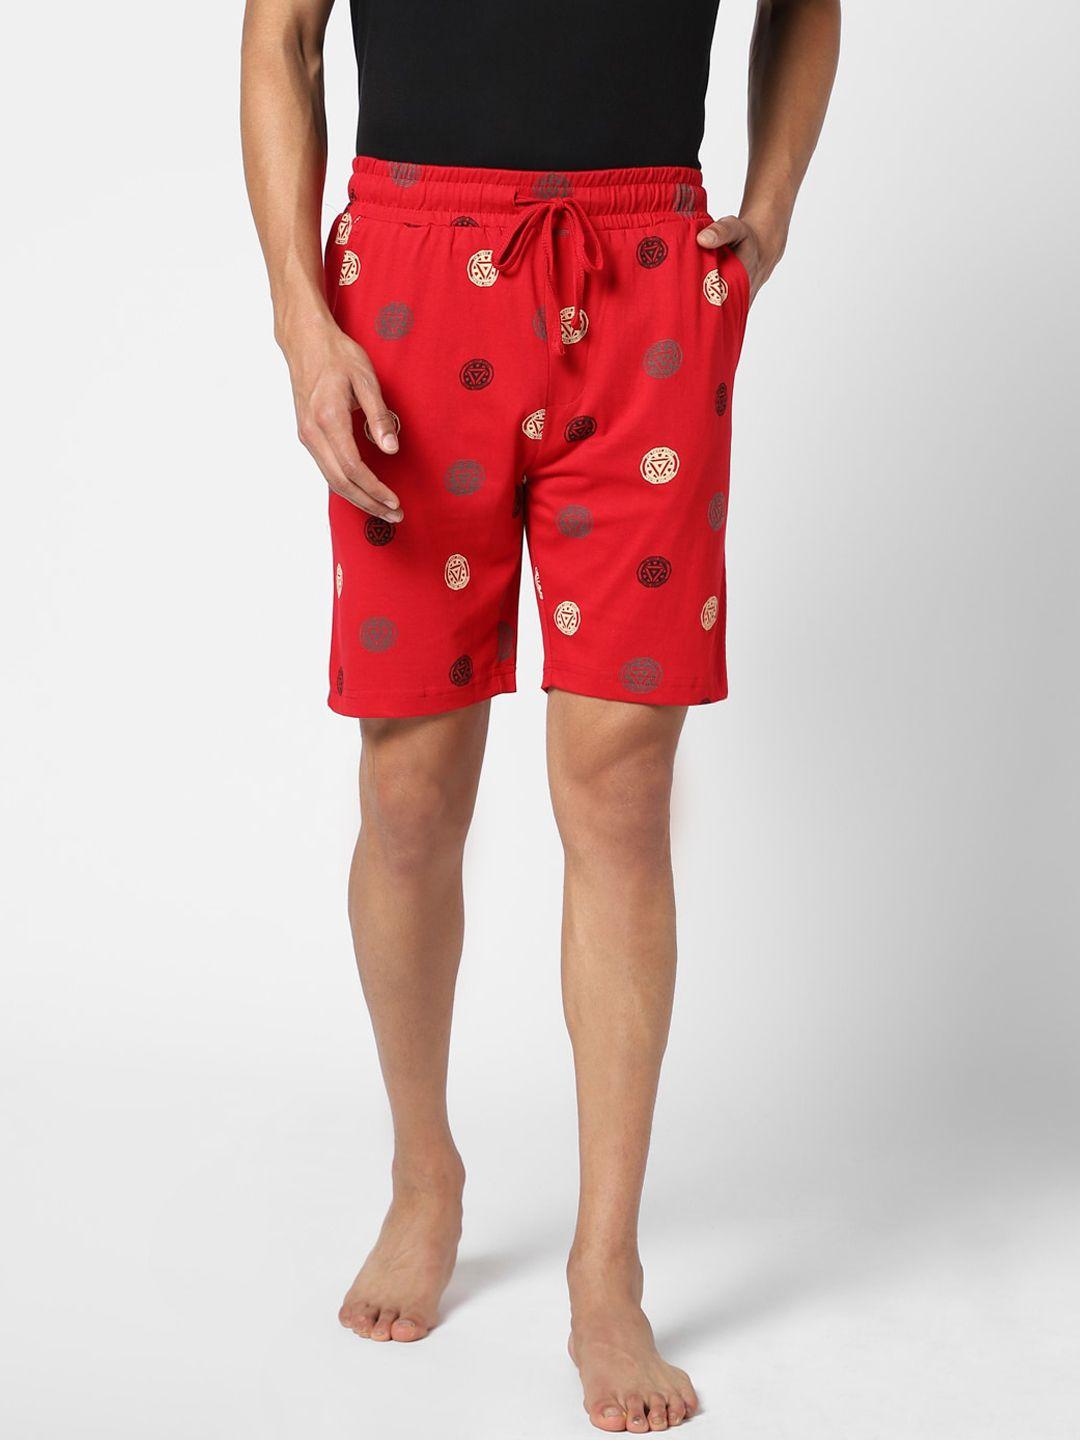 ajile by pantaloons men red printed slim fit shorts